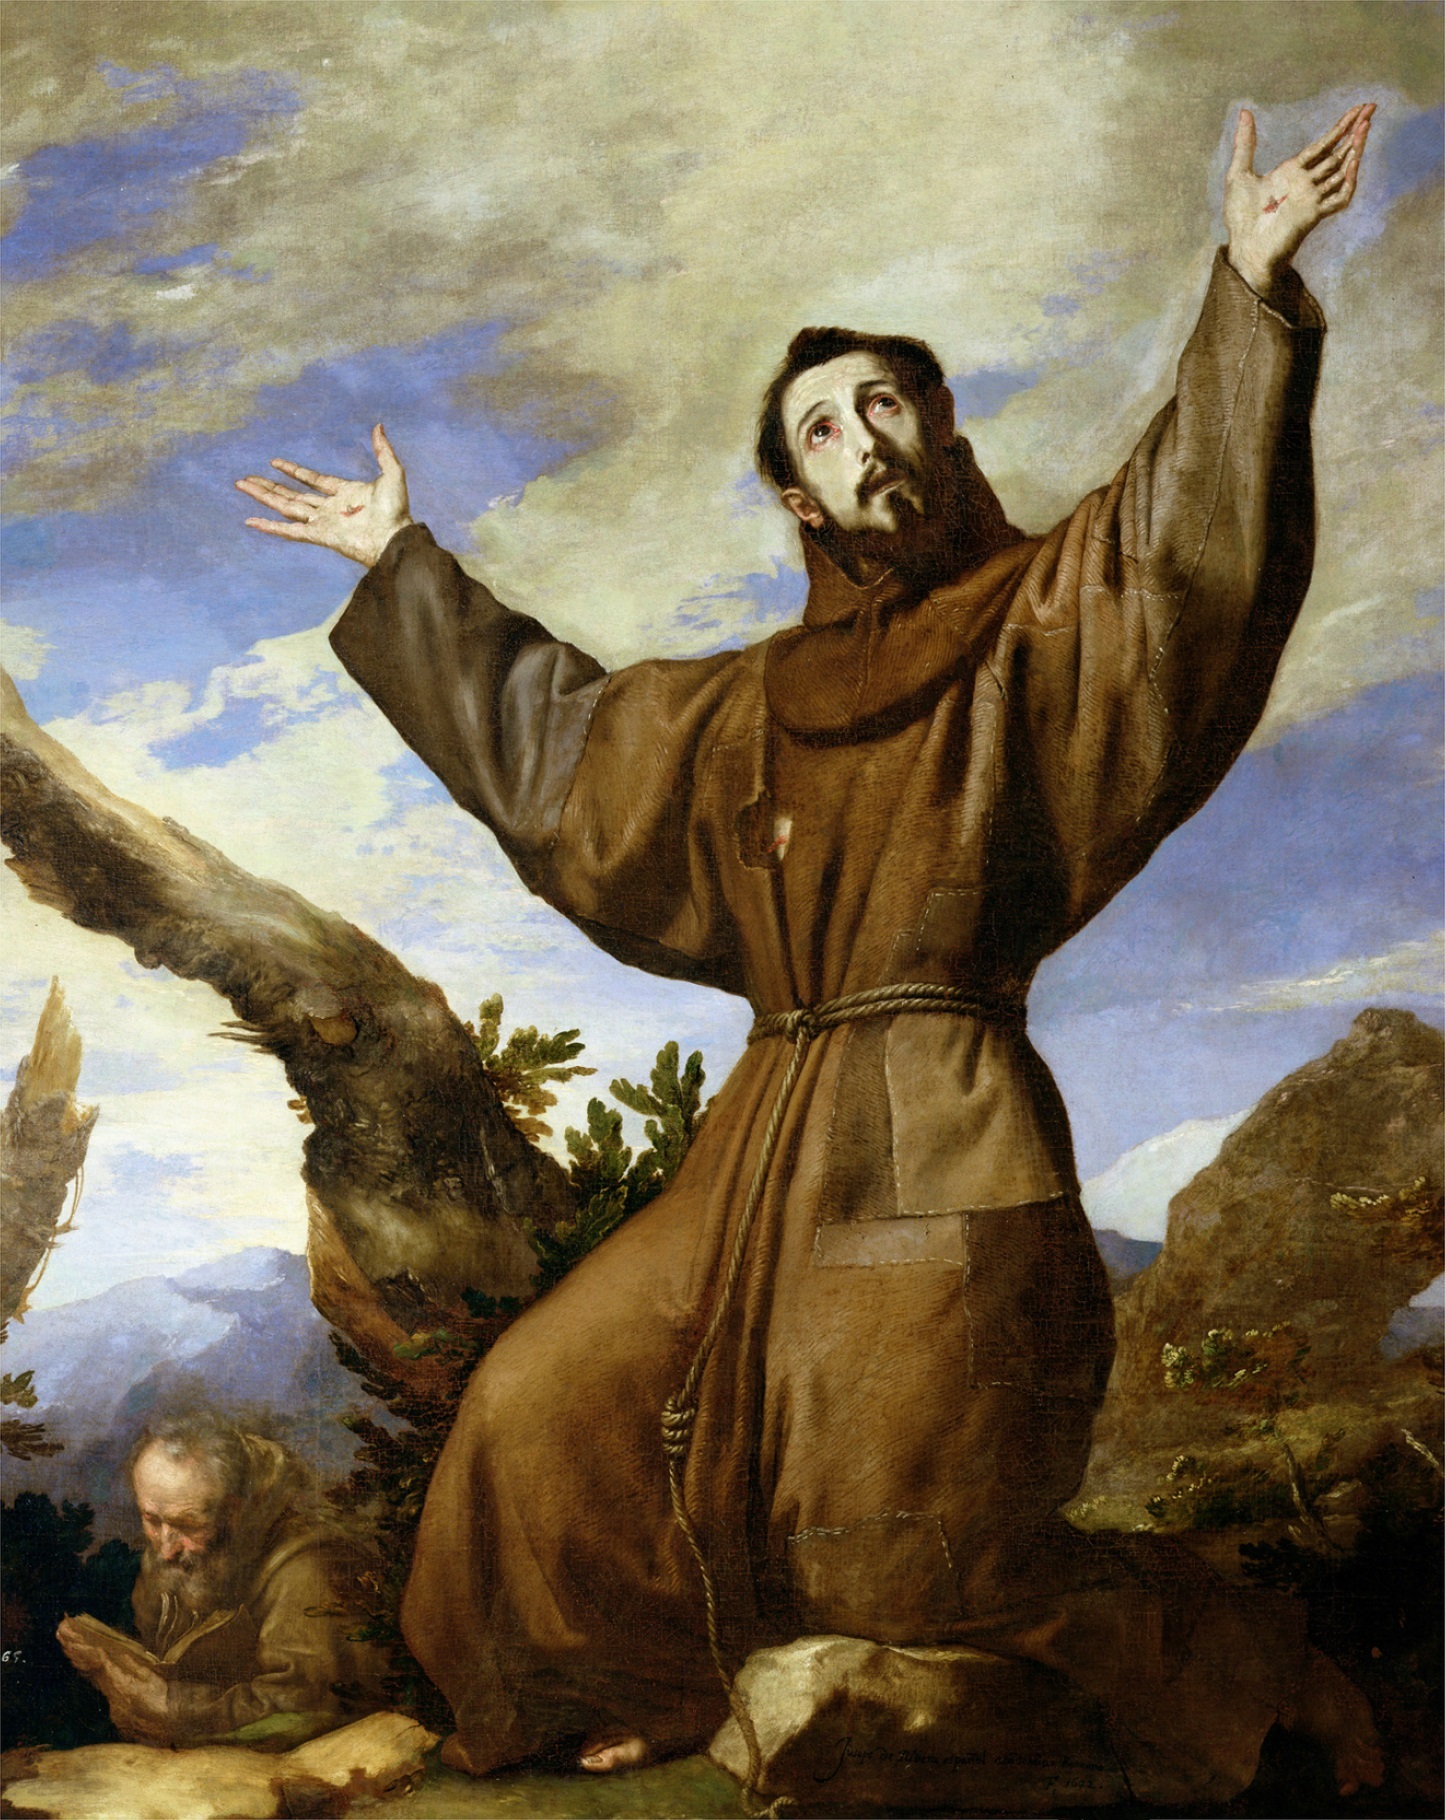 http://upload.wikimedia.org/wikipedia/commons/f/fb/Saint_Francis_of_Assisi_by_Jusepe_de_Ribera.jpg